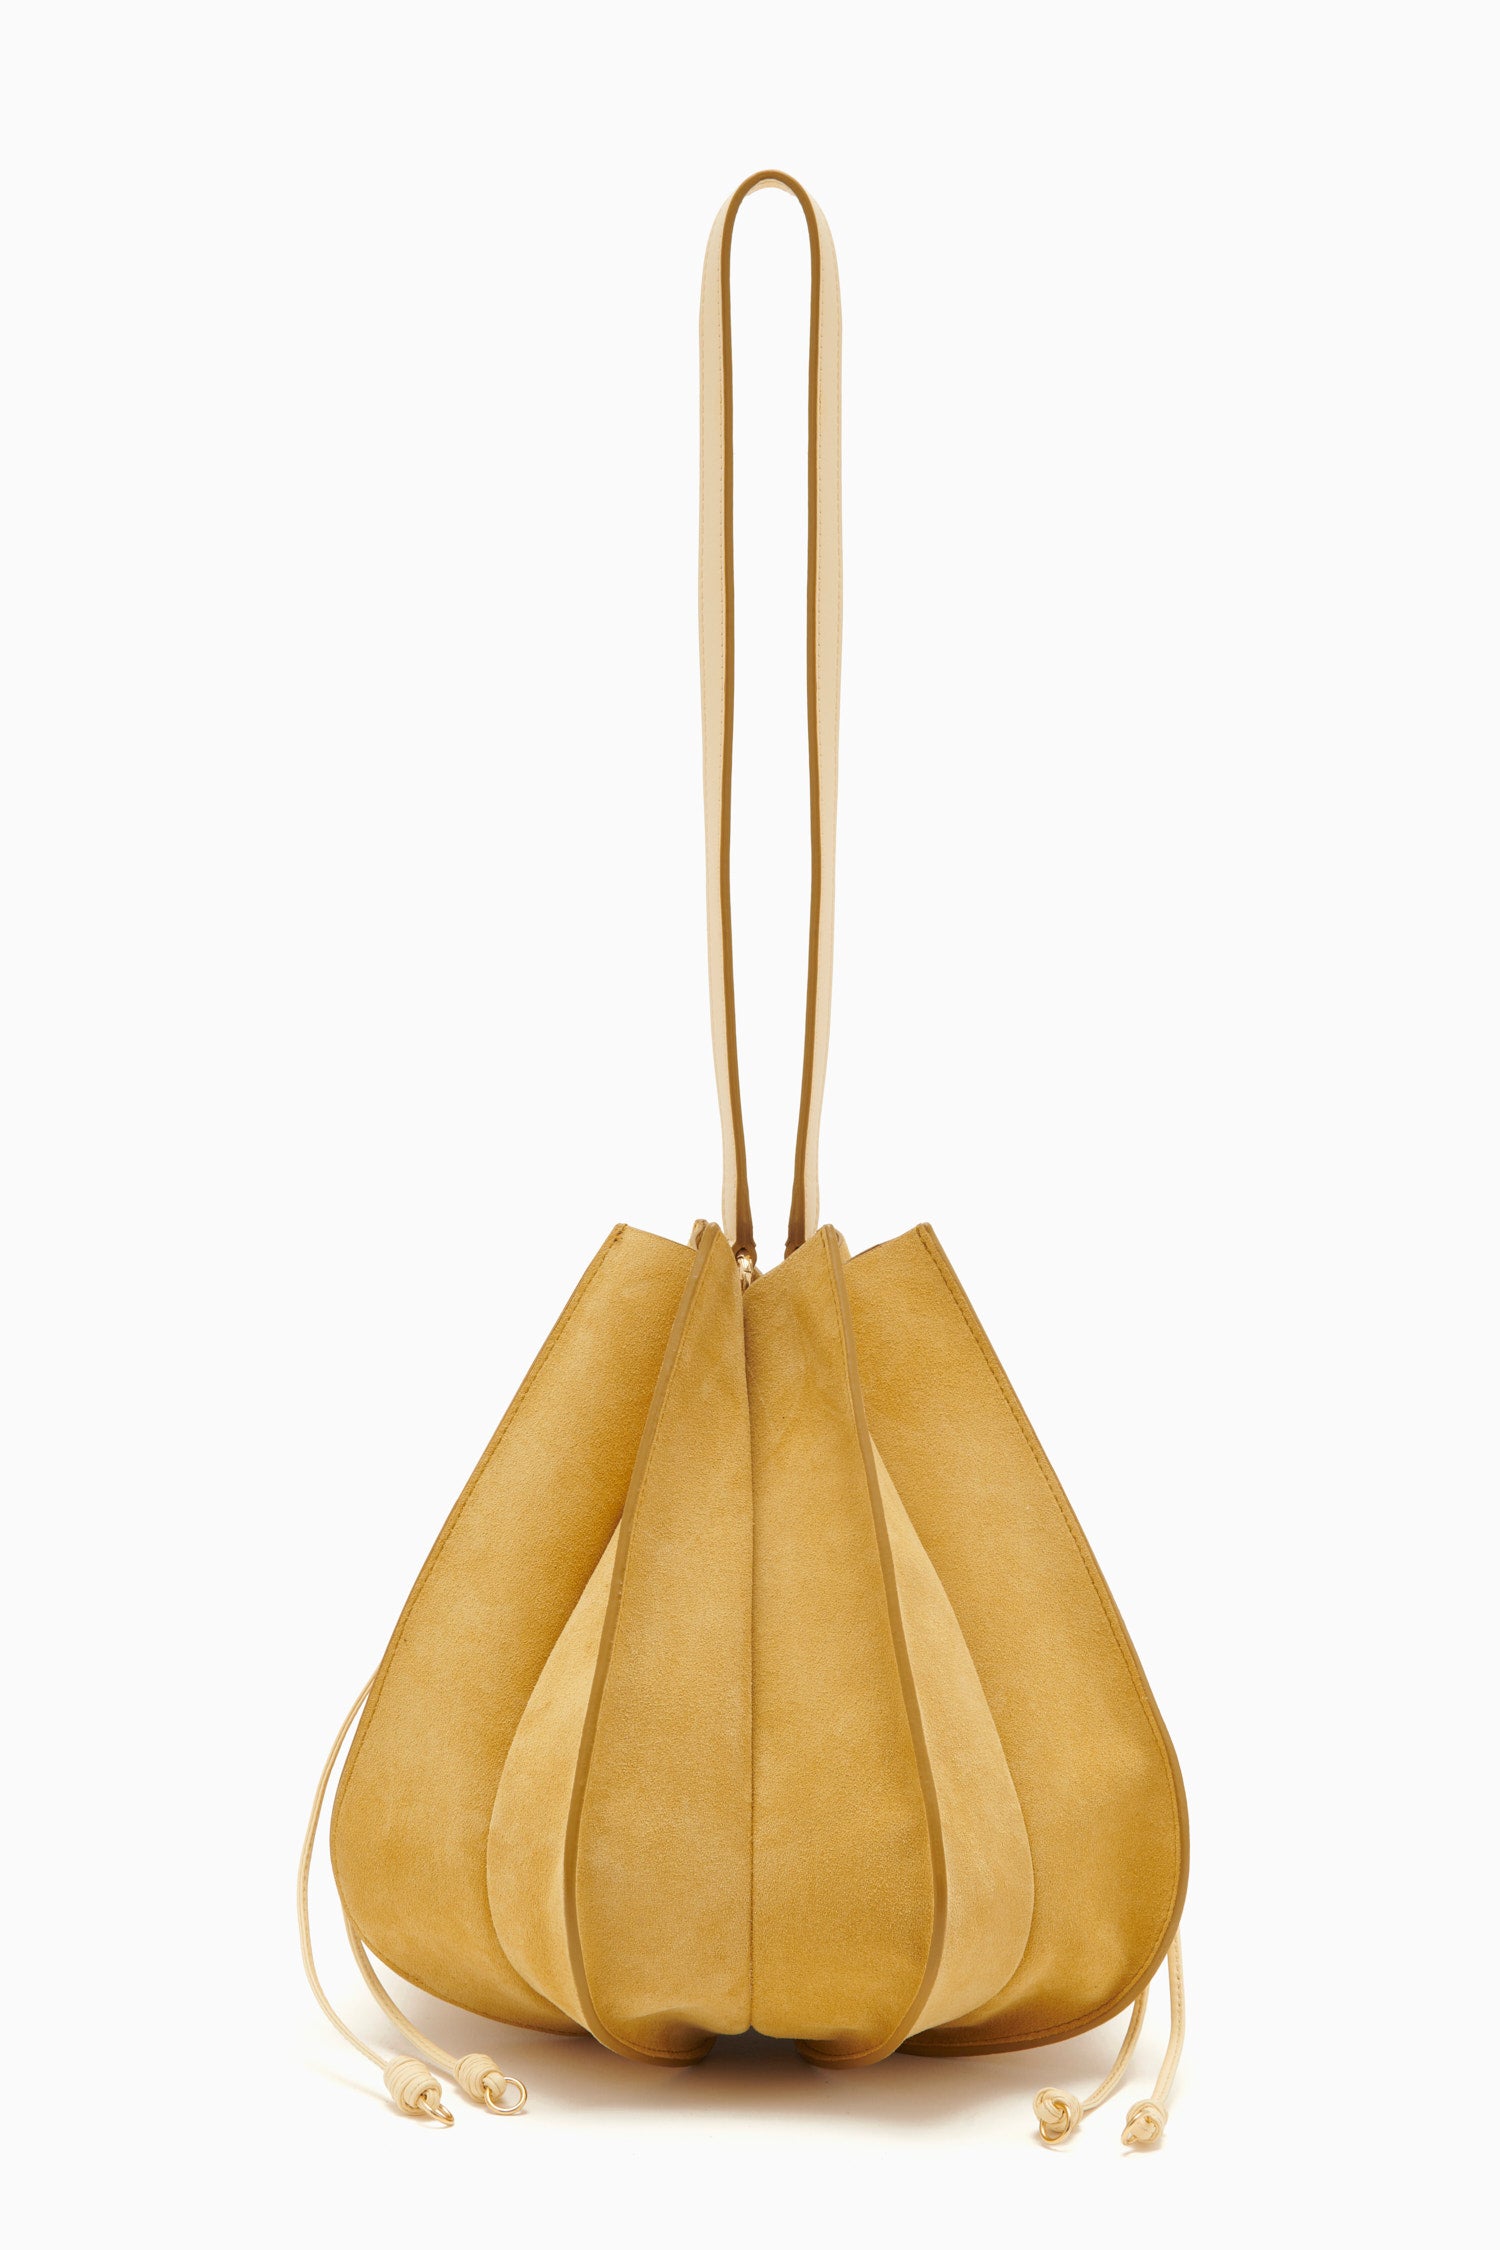 Ulla Johnson Women's Lotus Flower Large Bag in Yellow | Leather